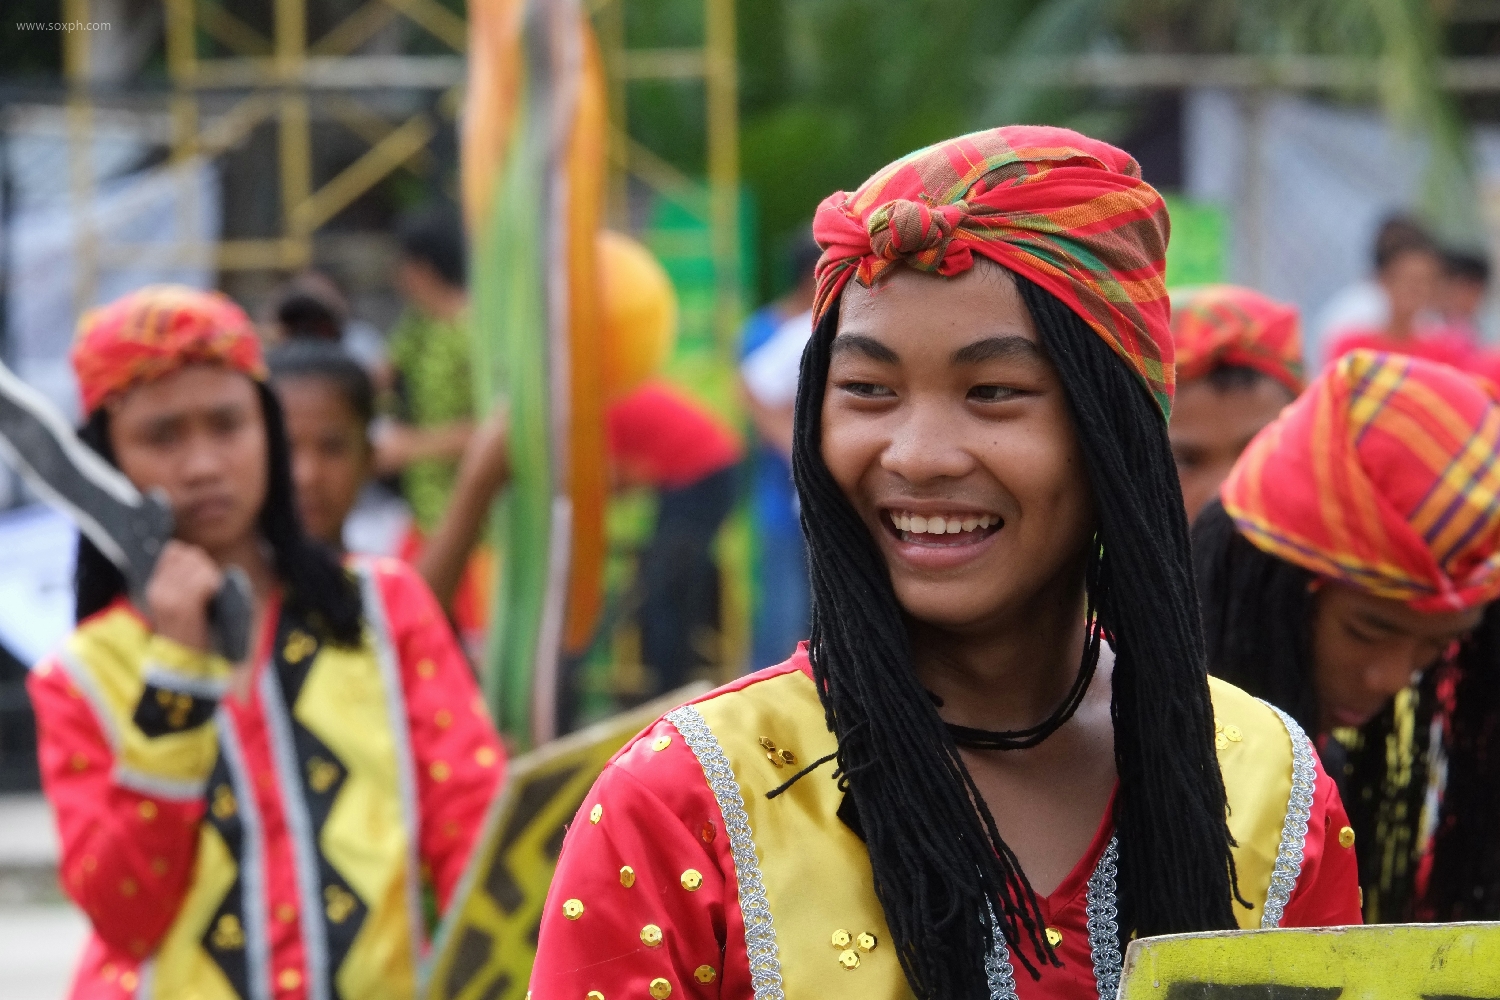 Ingkil-Ingkil sa Salagaan, a colorful showcase of rich culture in Kalamansig